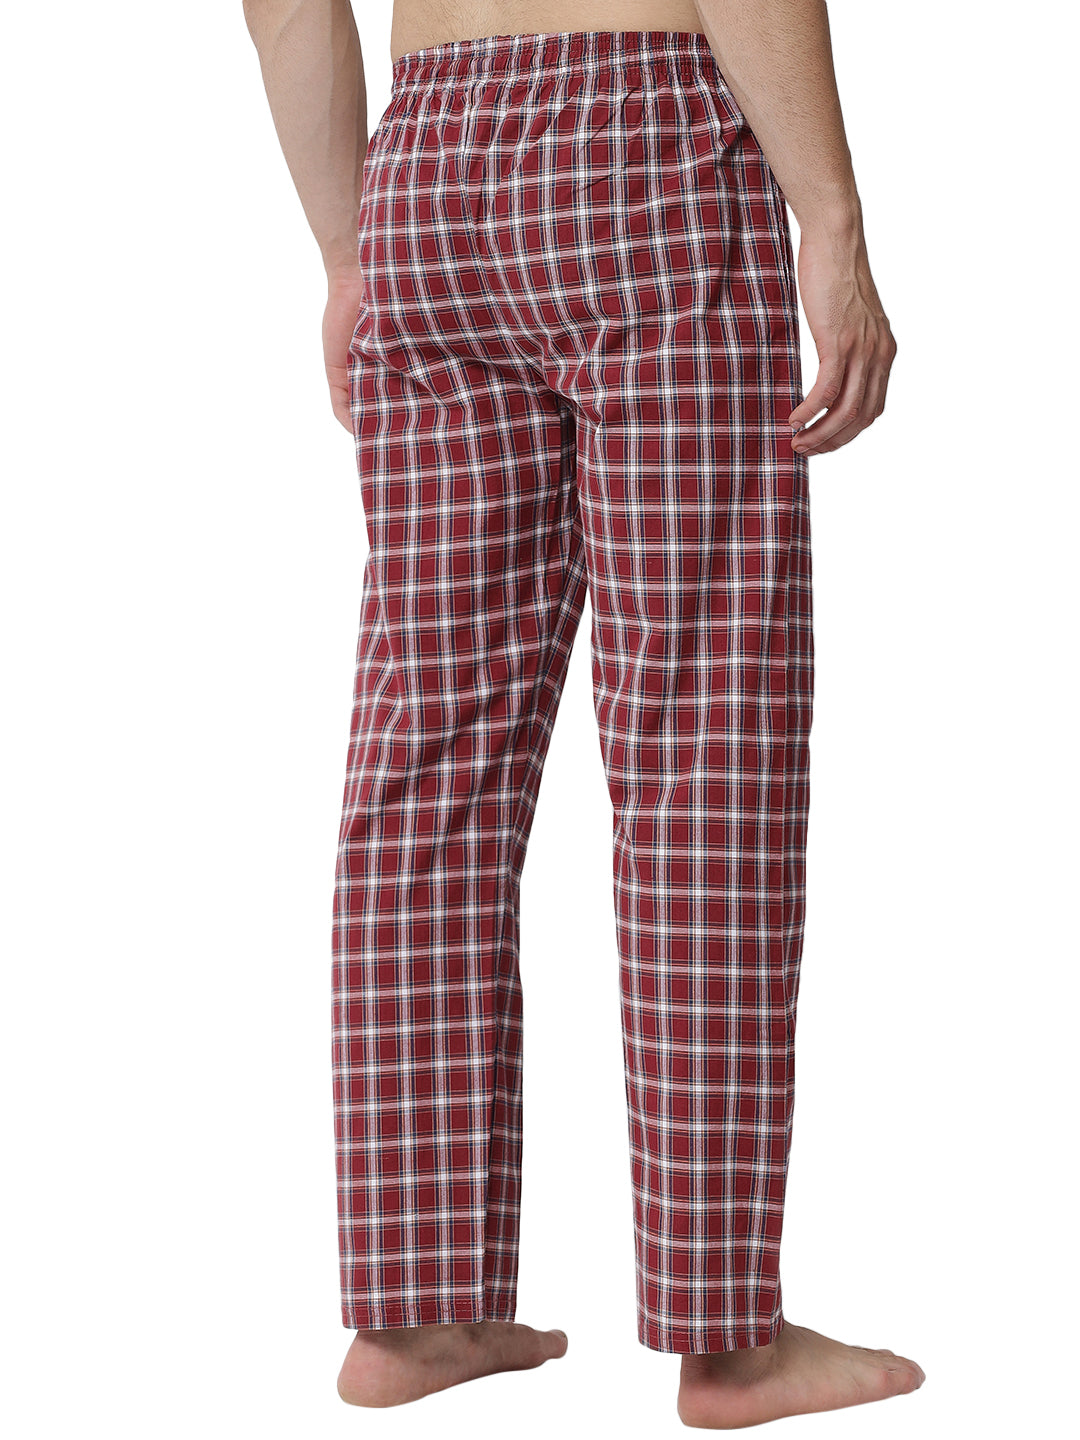 Men's Cotton Pyjama